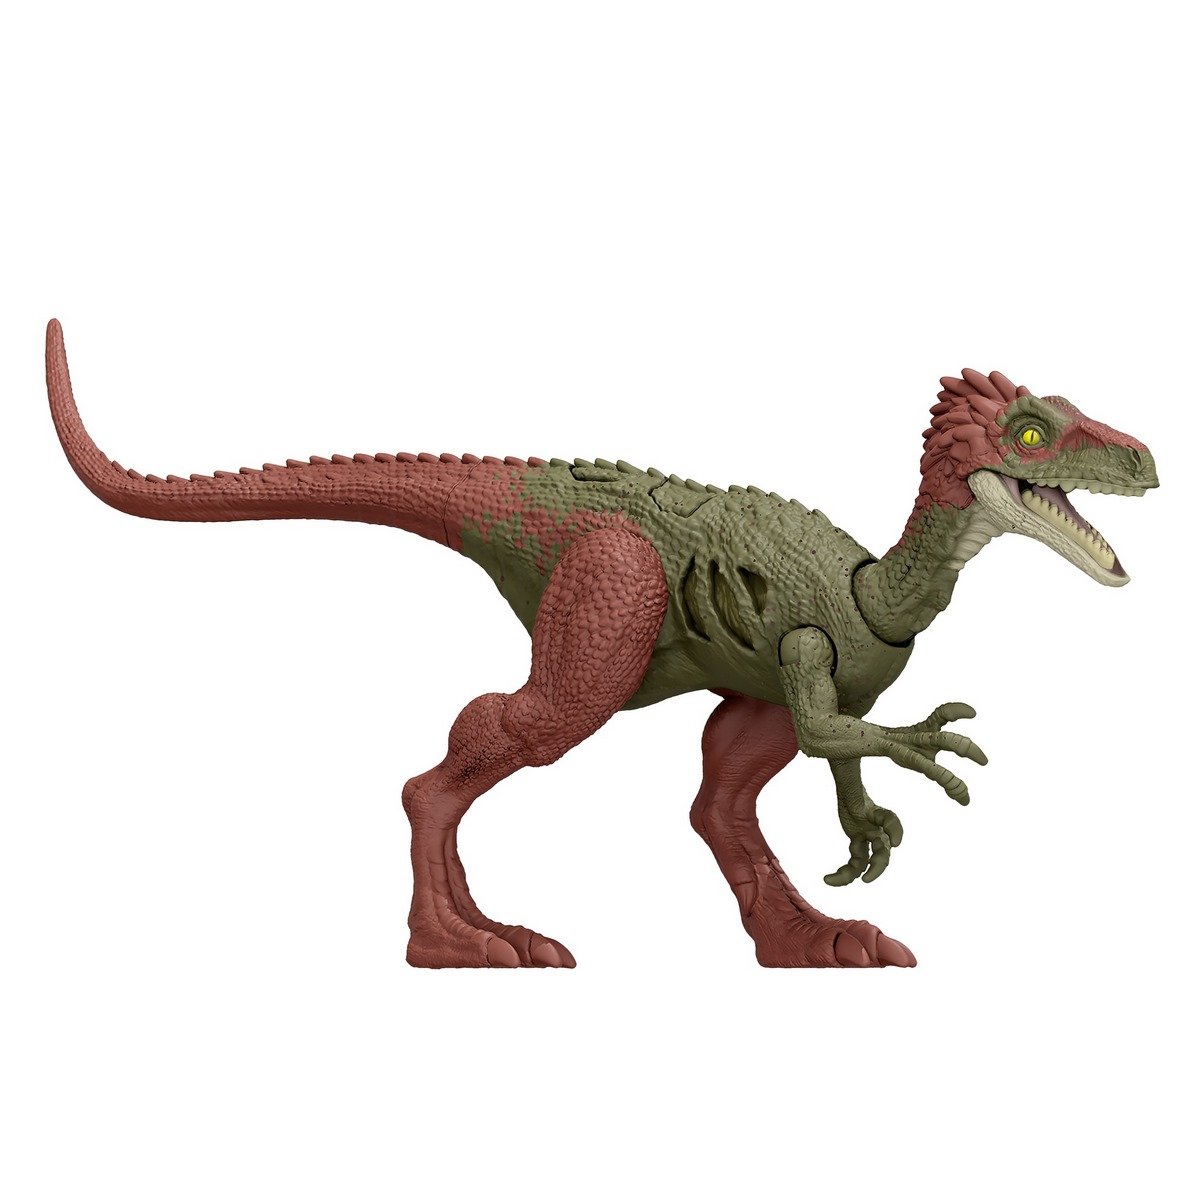 Figurine Dinosaure blessure extrême